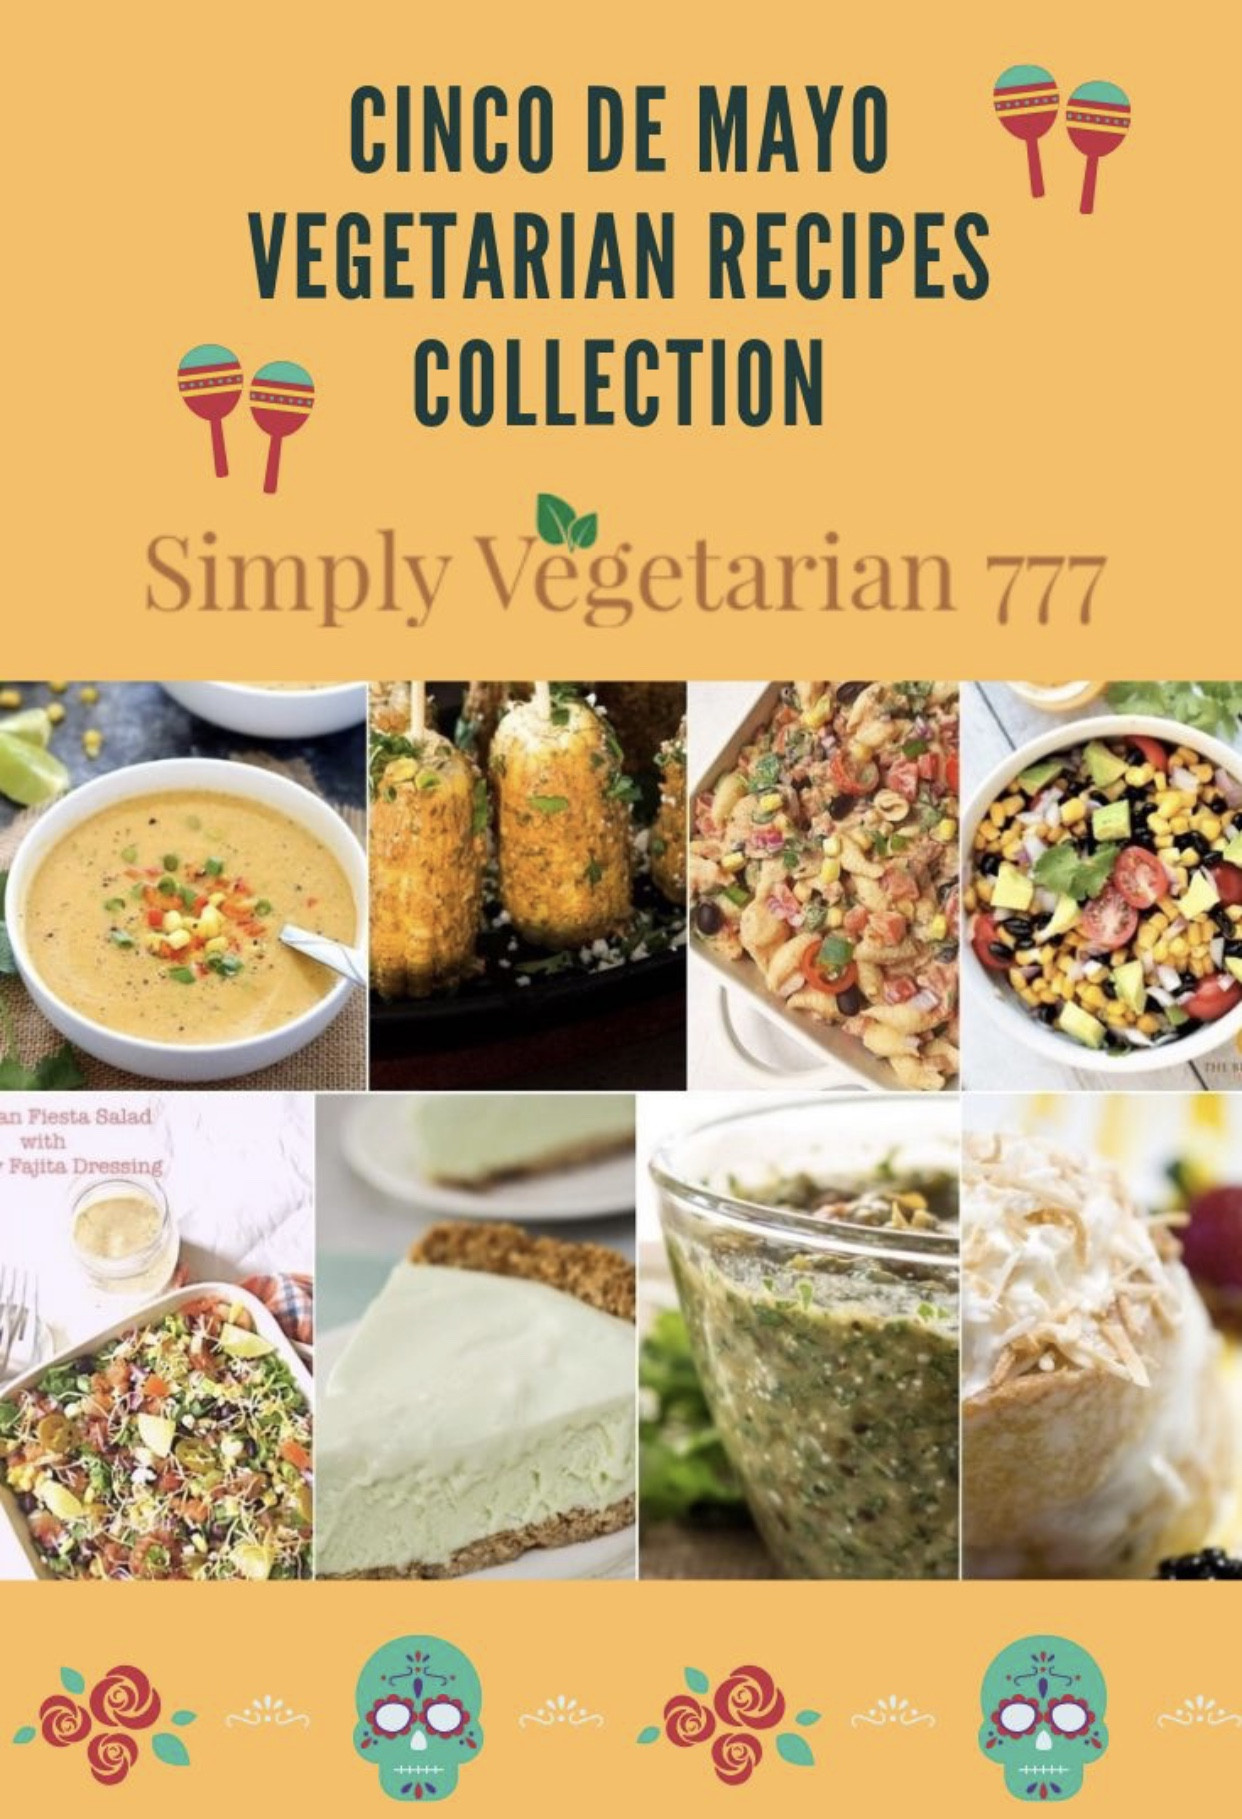 Vegetarian Cinco De Mayo Recipes
 Cinco de Mayo Ve arian Recipes Collection Recipes to